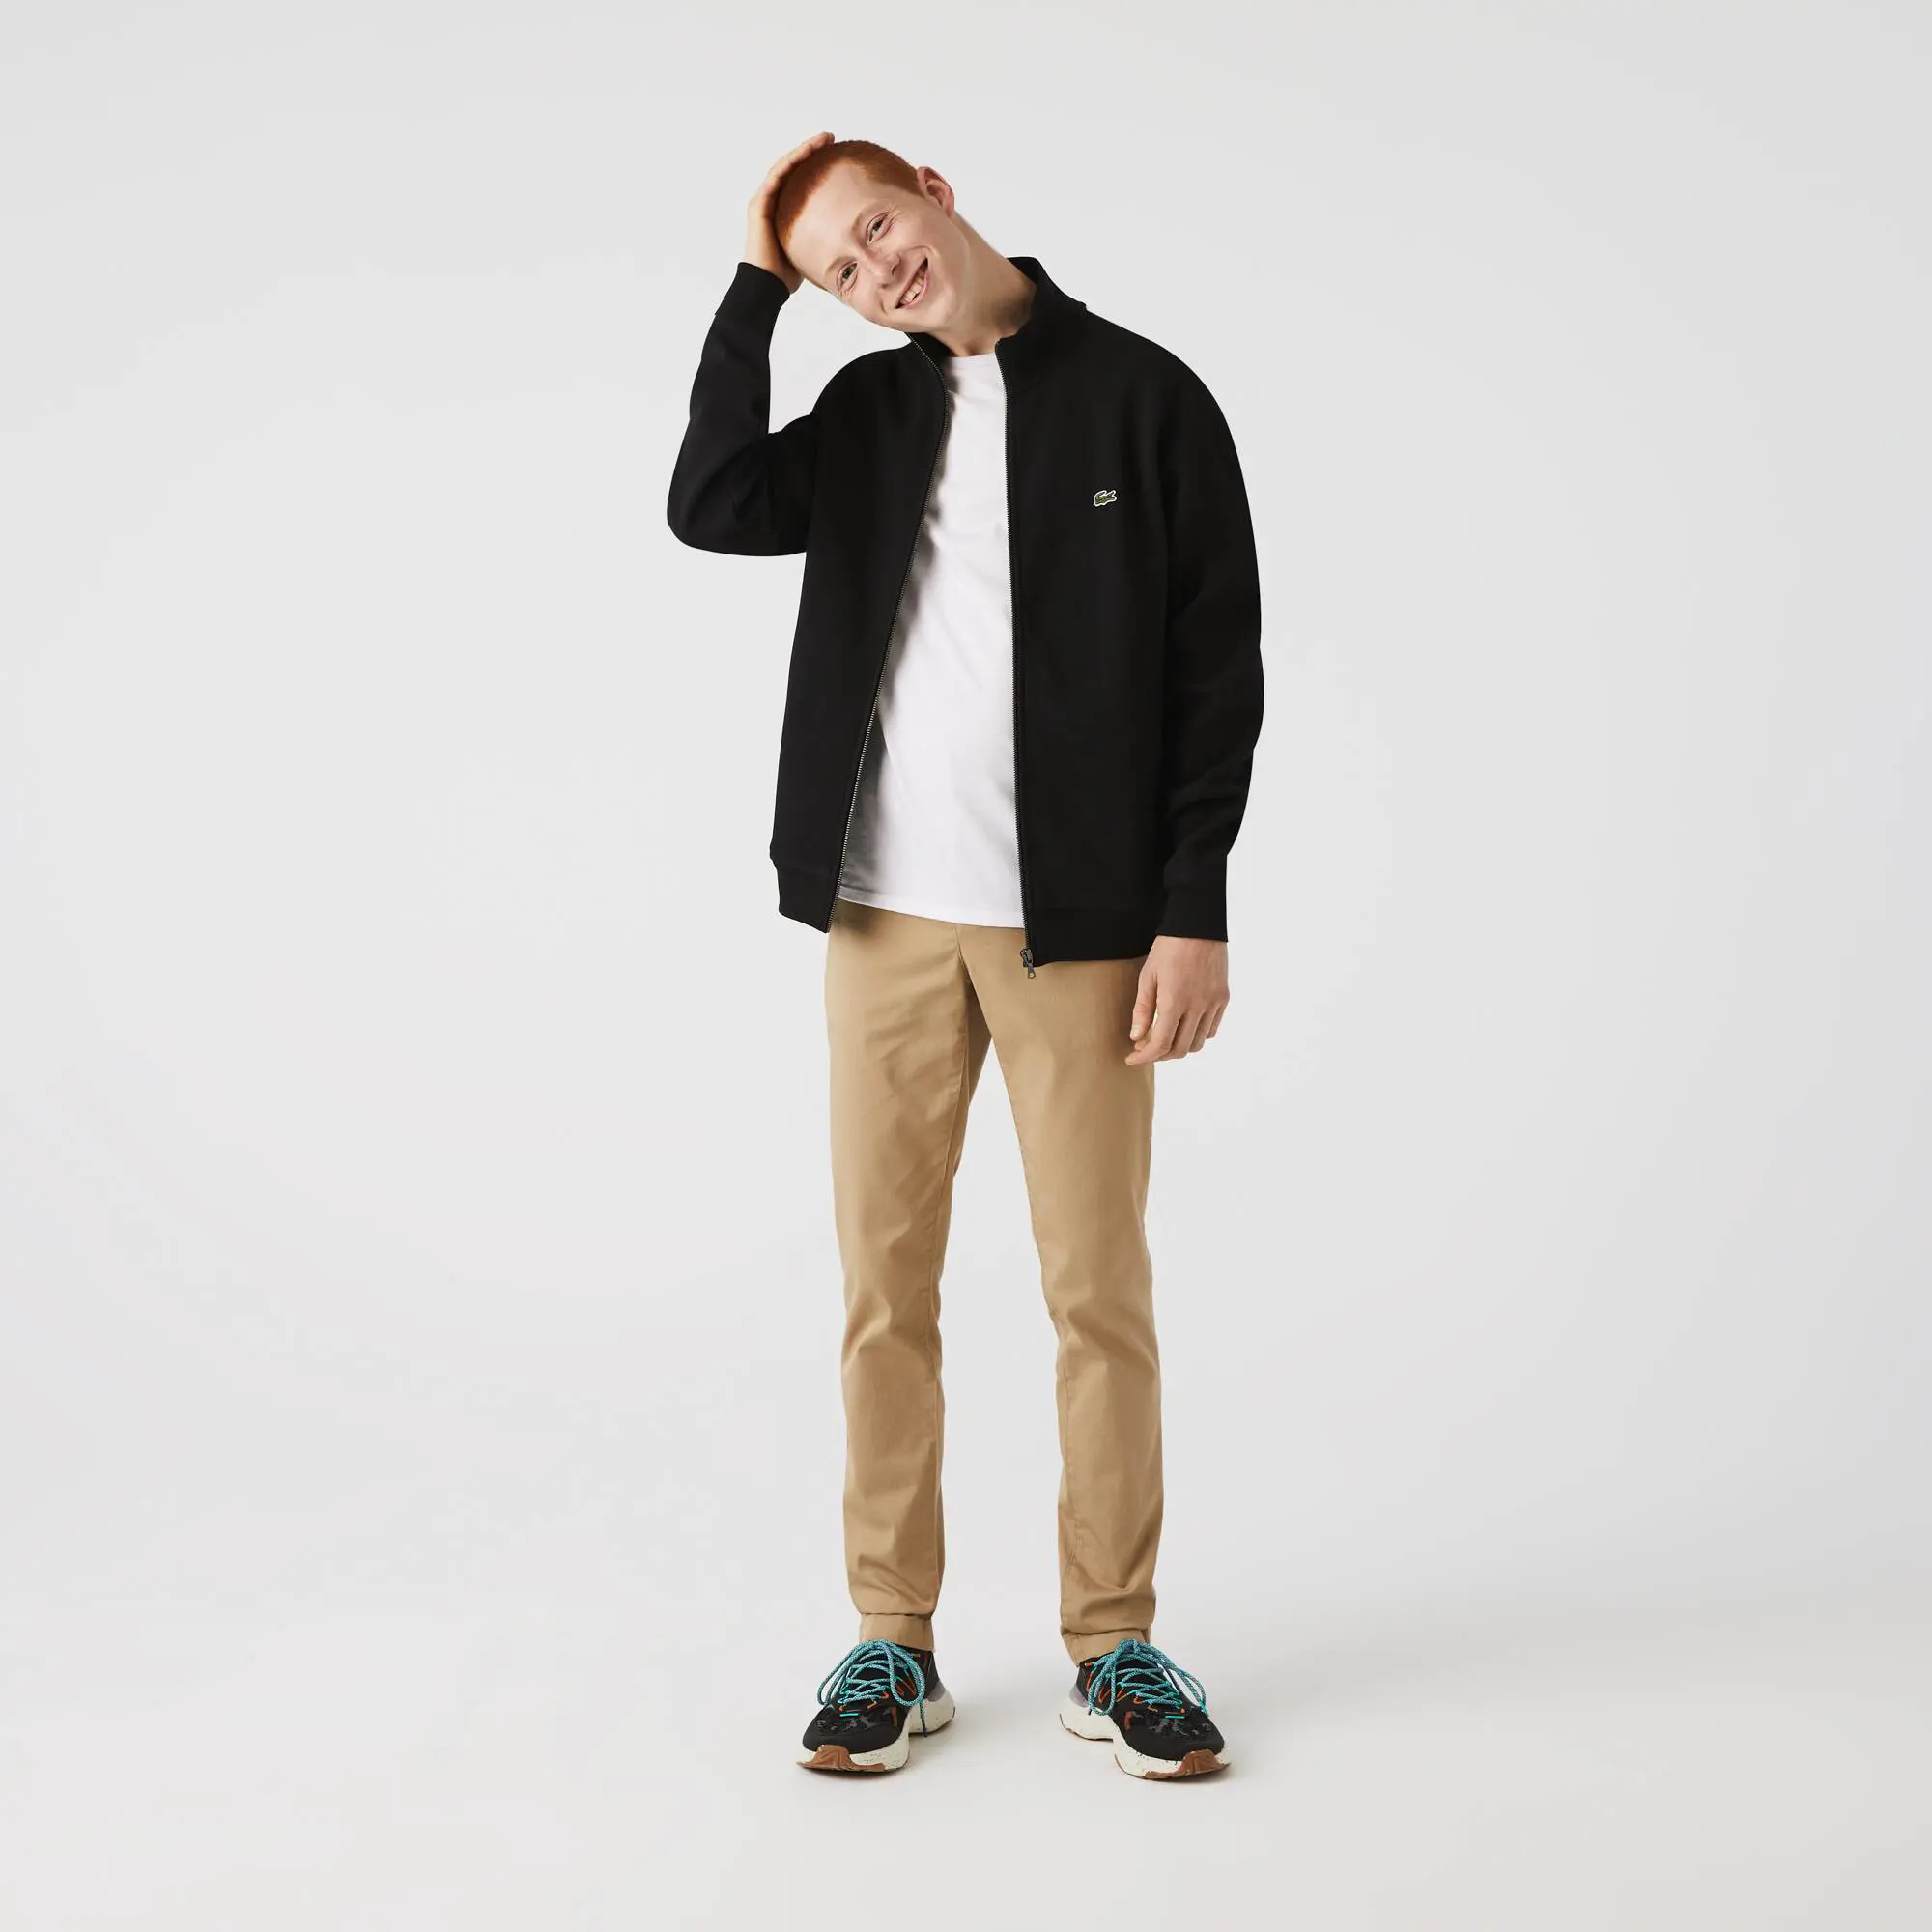 Lacoste Men's Zippered Stand-Up Collar Piqué Fleece Jacket. 1